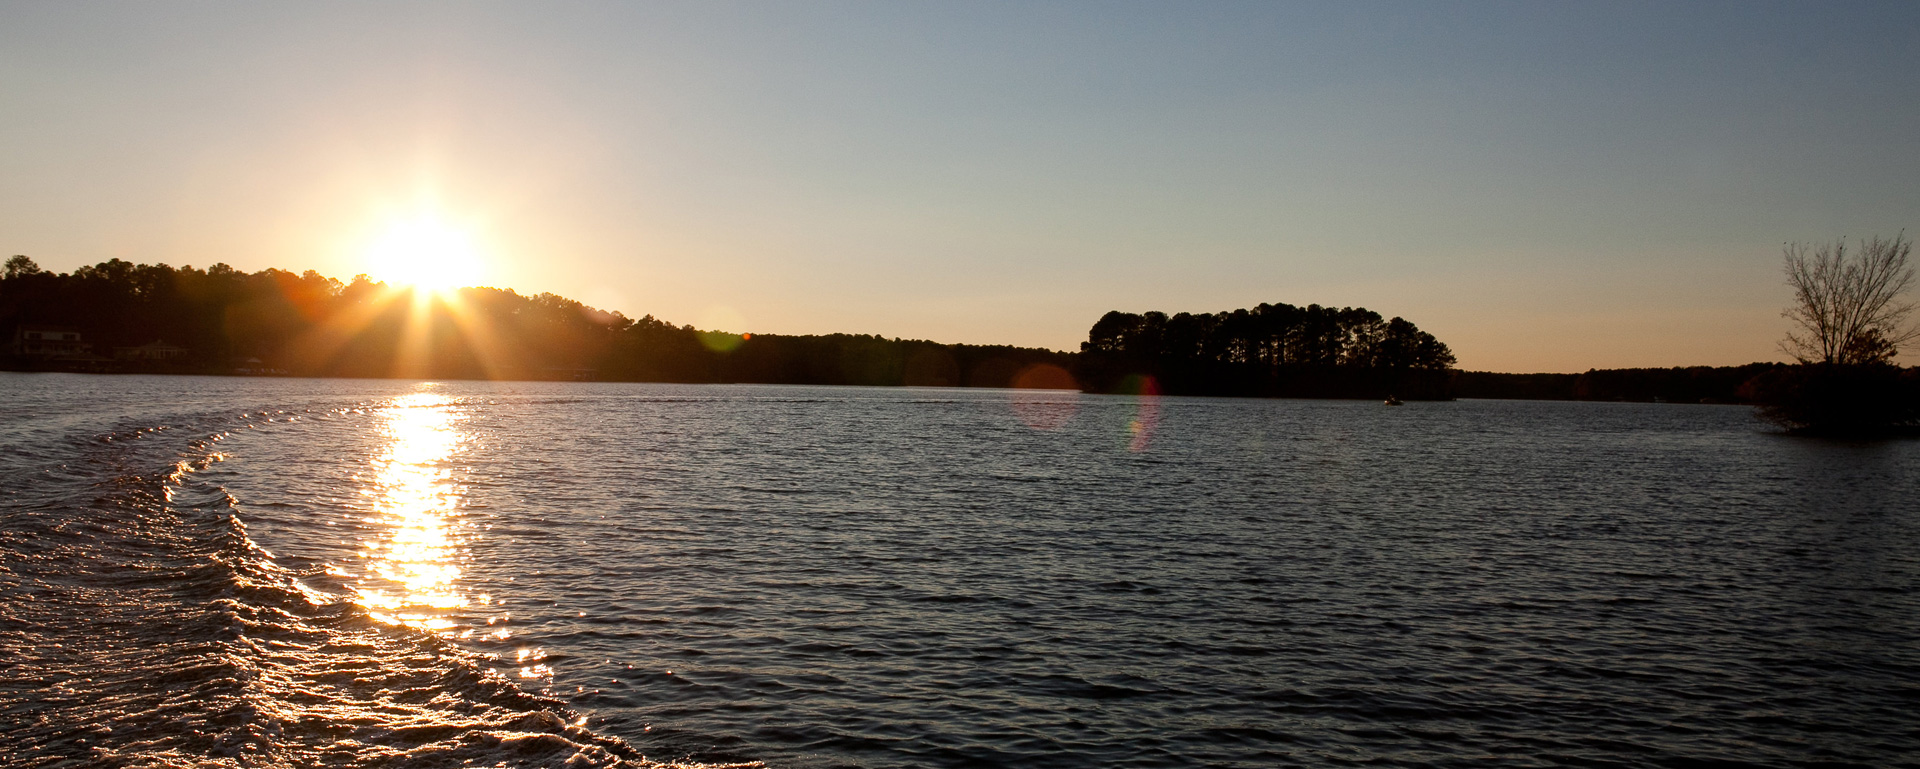 Another beautiful sunset on Lake Gaston